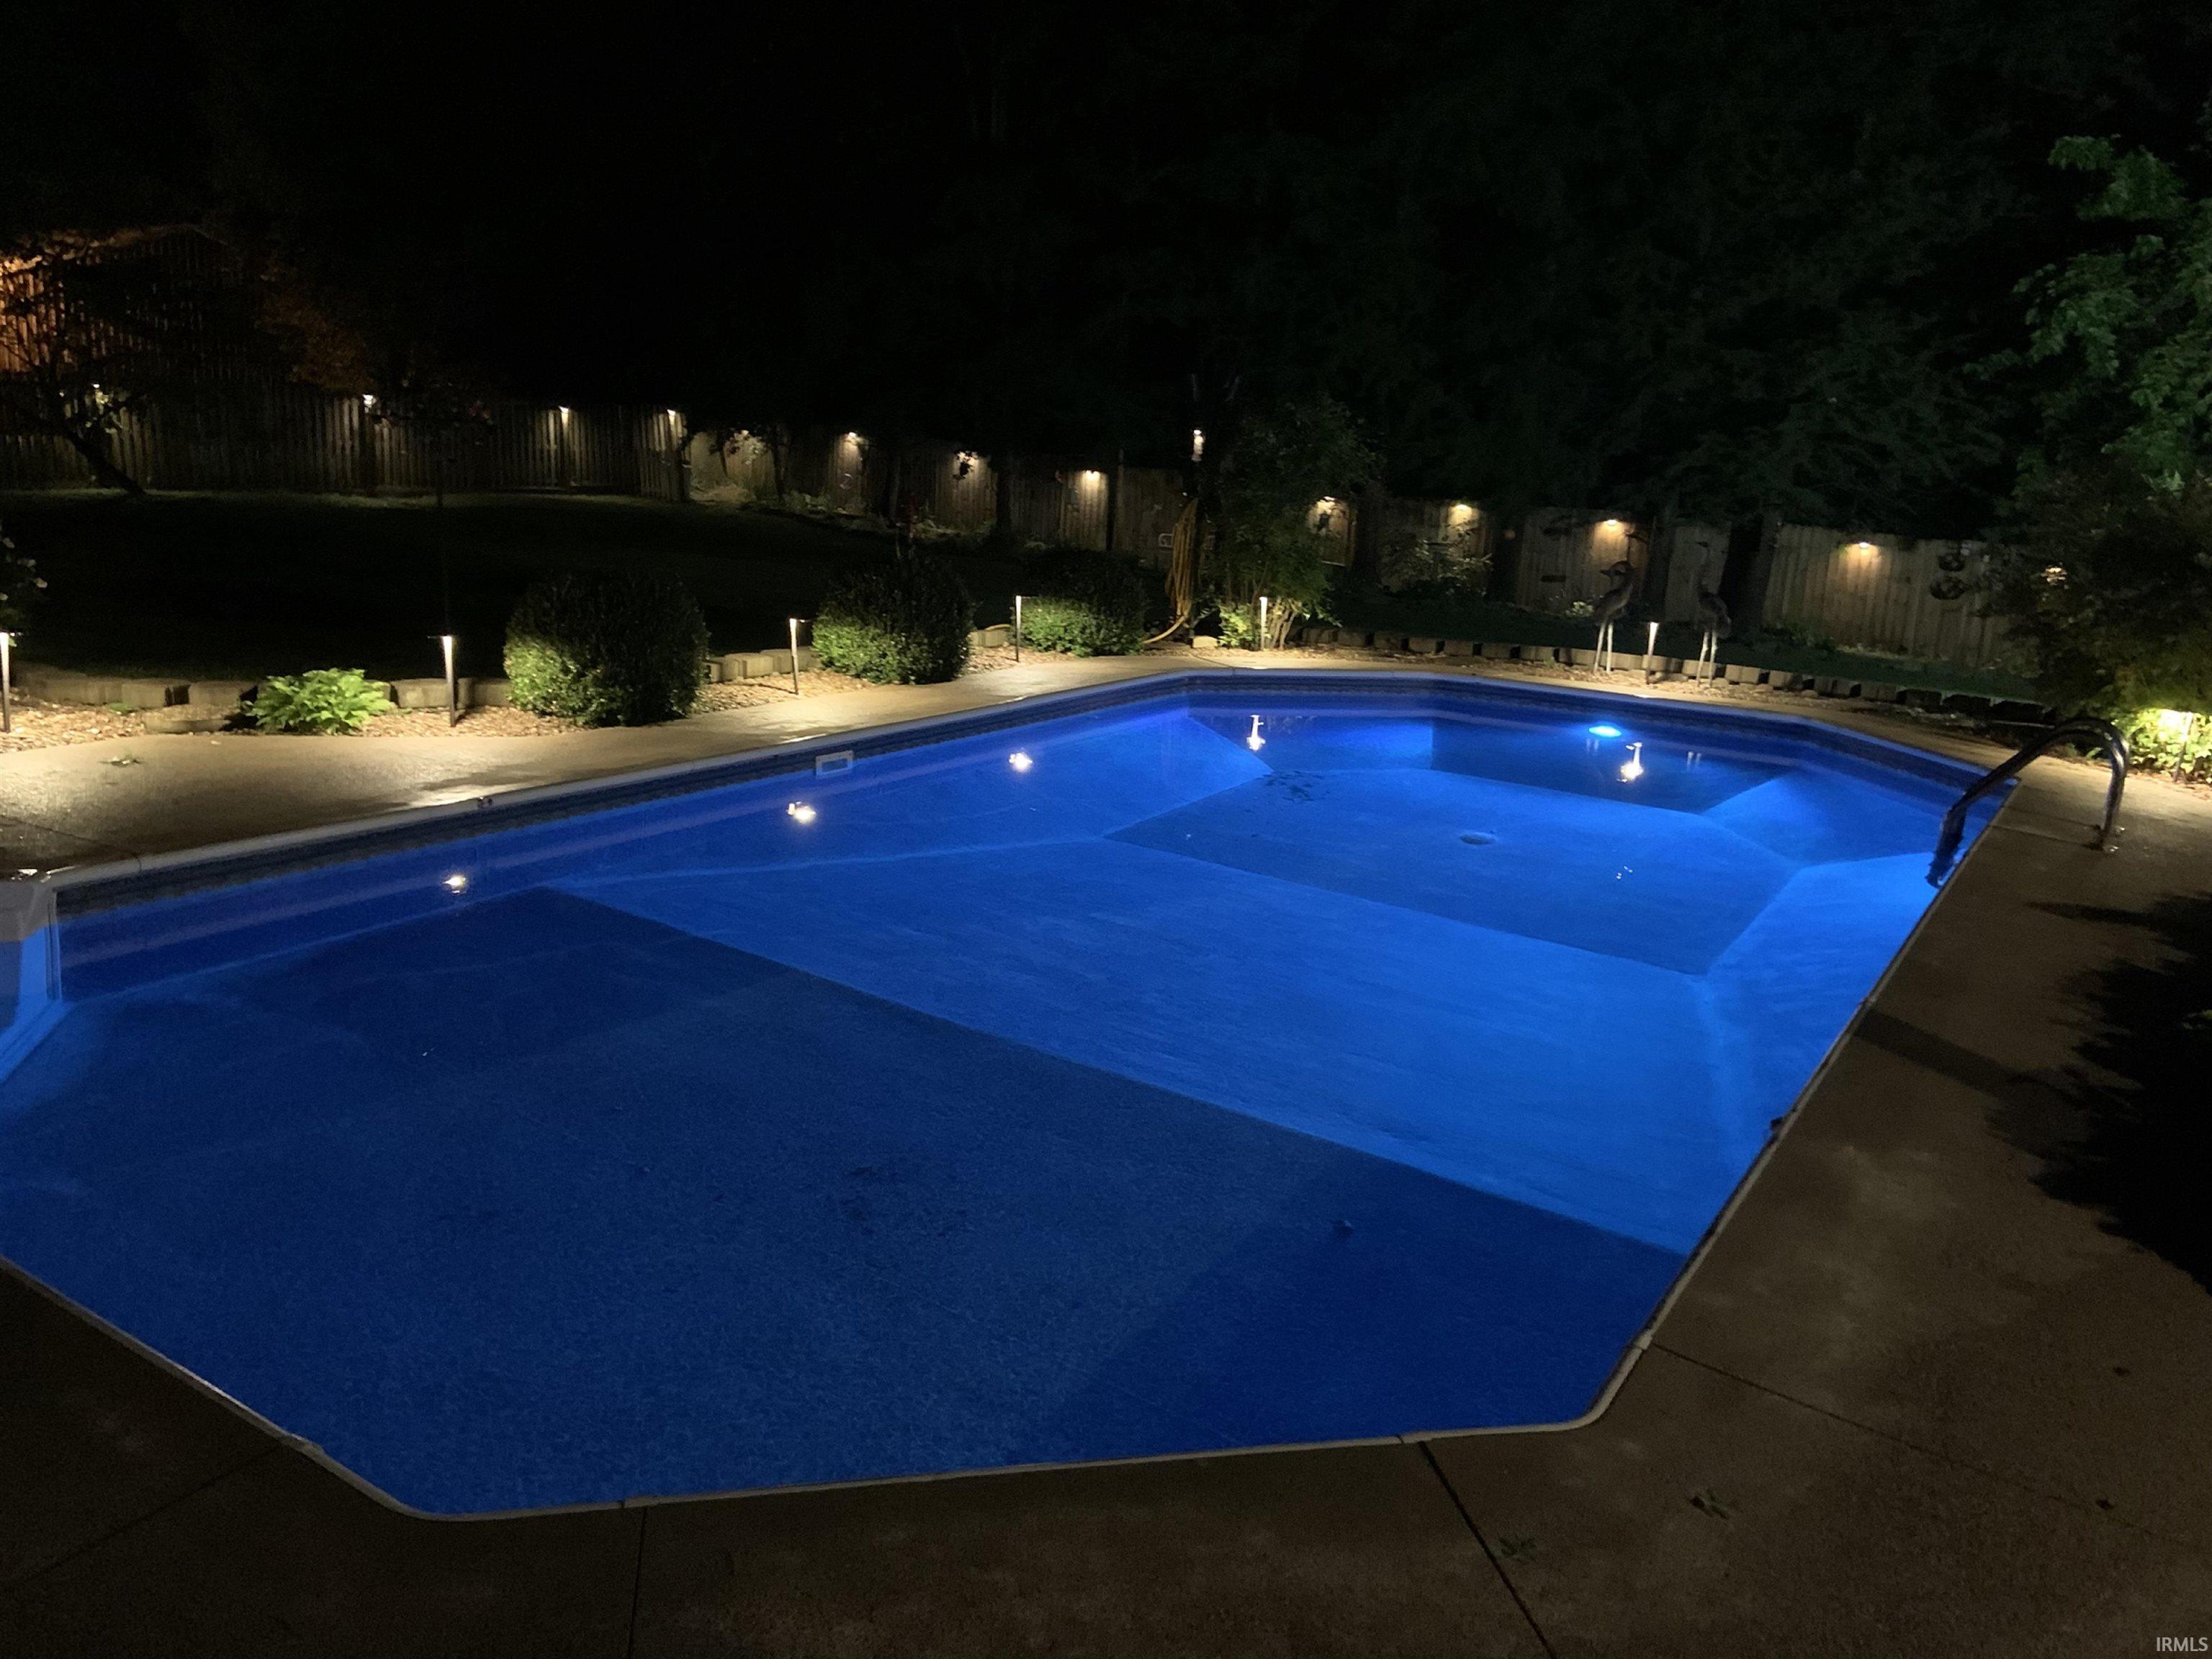 Night Pic of Pool